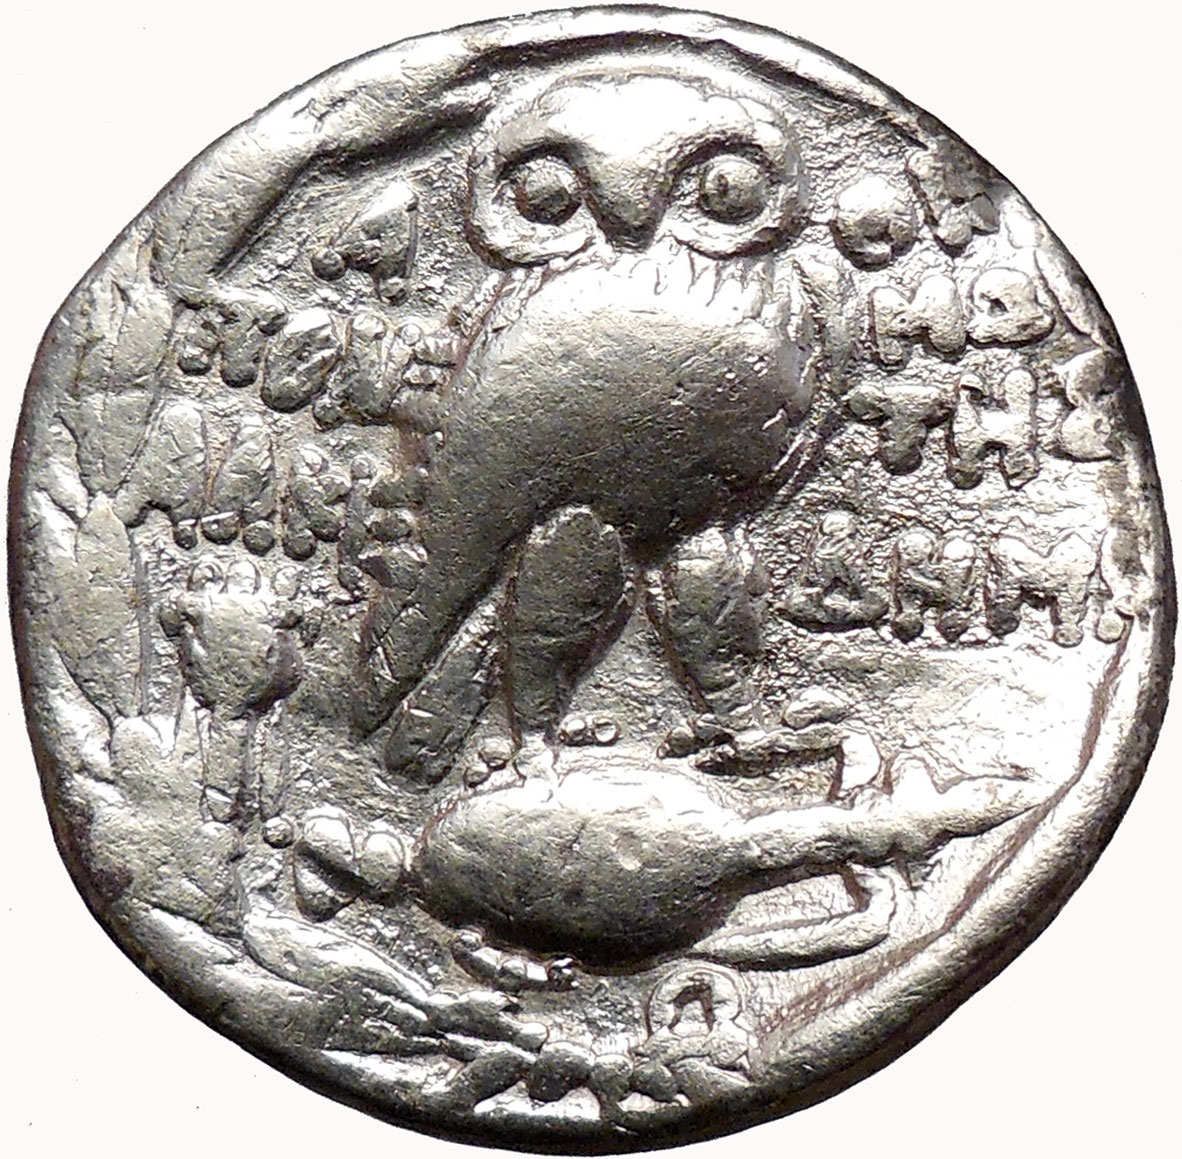 ATHENS Greece 125BC New Style Tetradrachm Athena Owl Ancient Silver